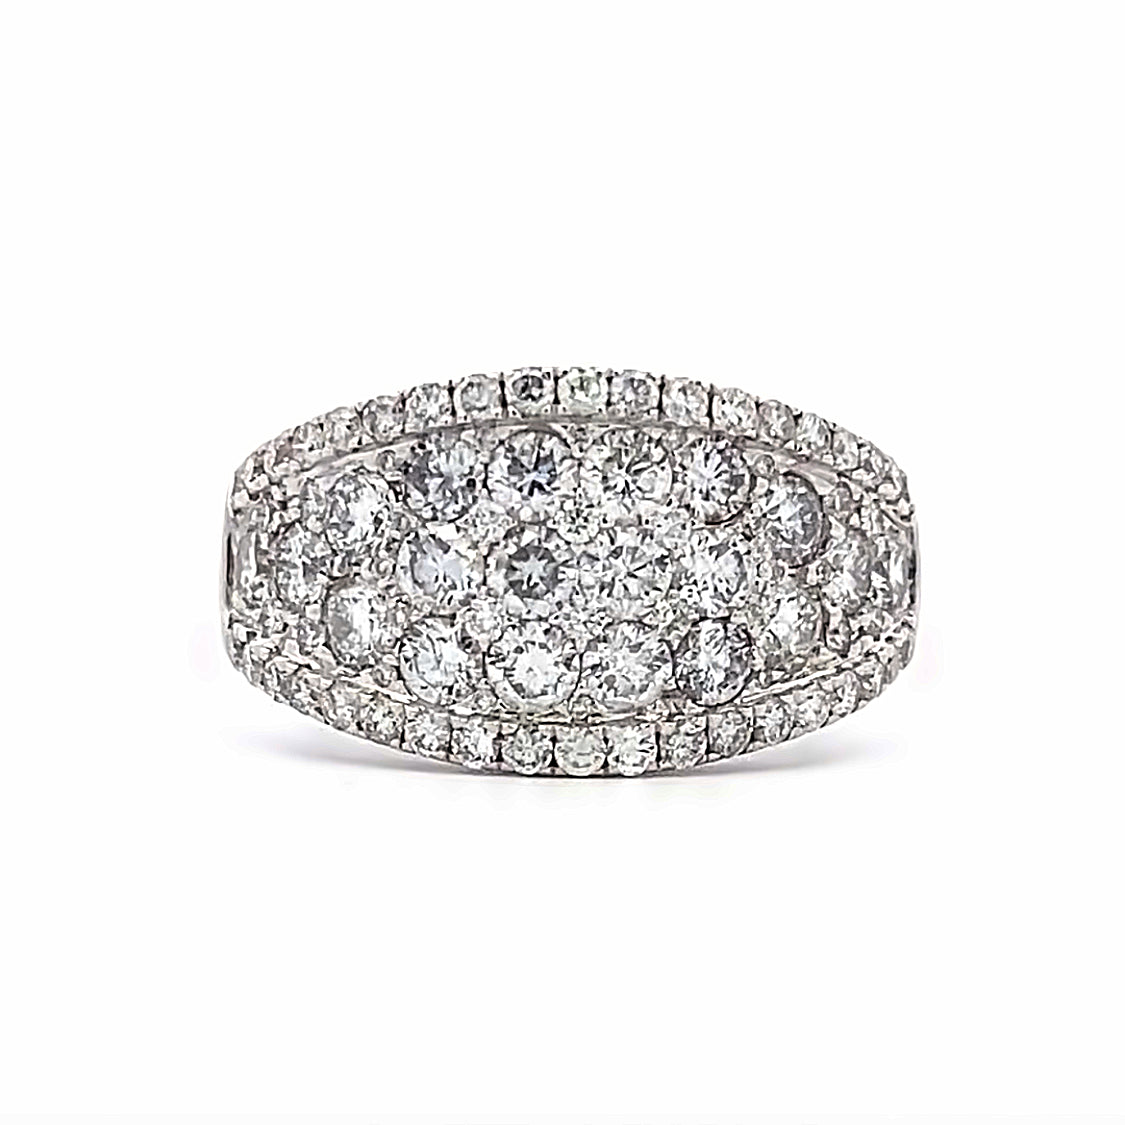 14 KT White Gold Pave' Diamond Fashion Ladies Ring  RG10240-4WB